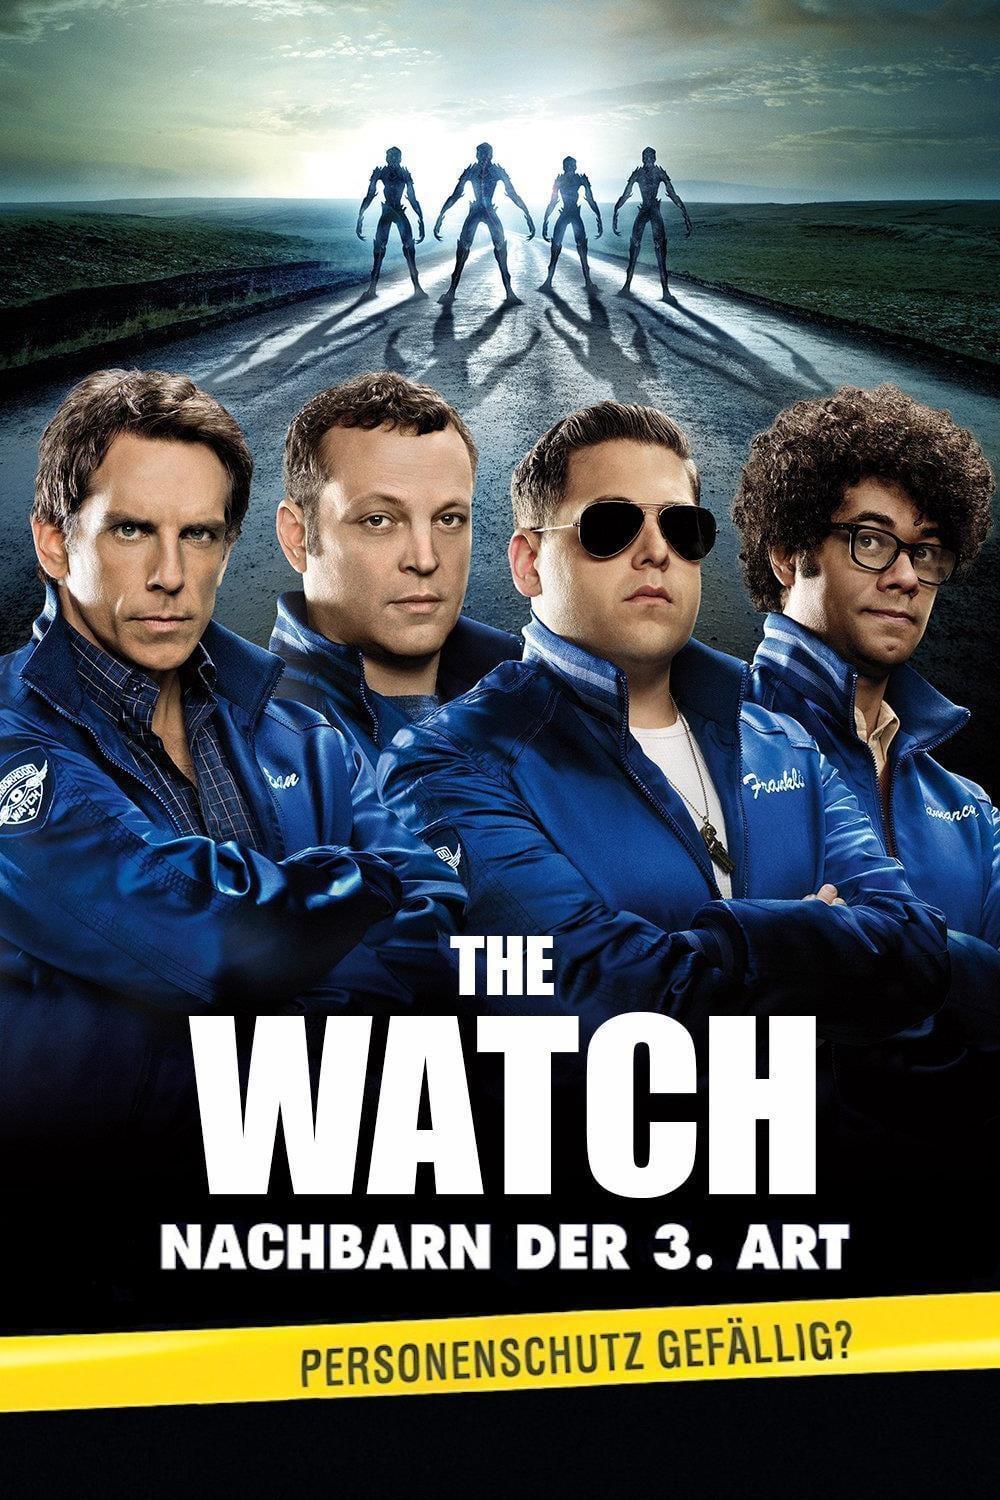 The Watch - Nachbarn der 3. Art poster